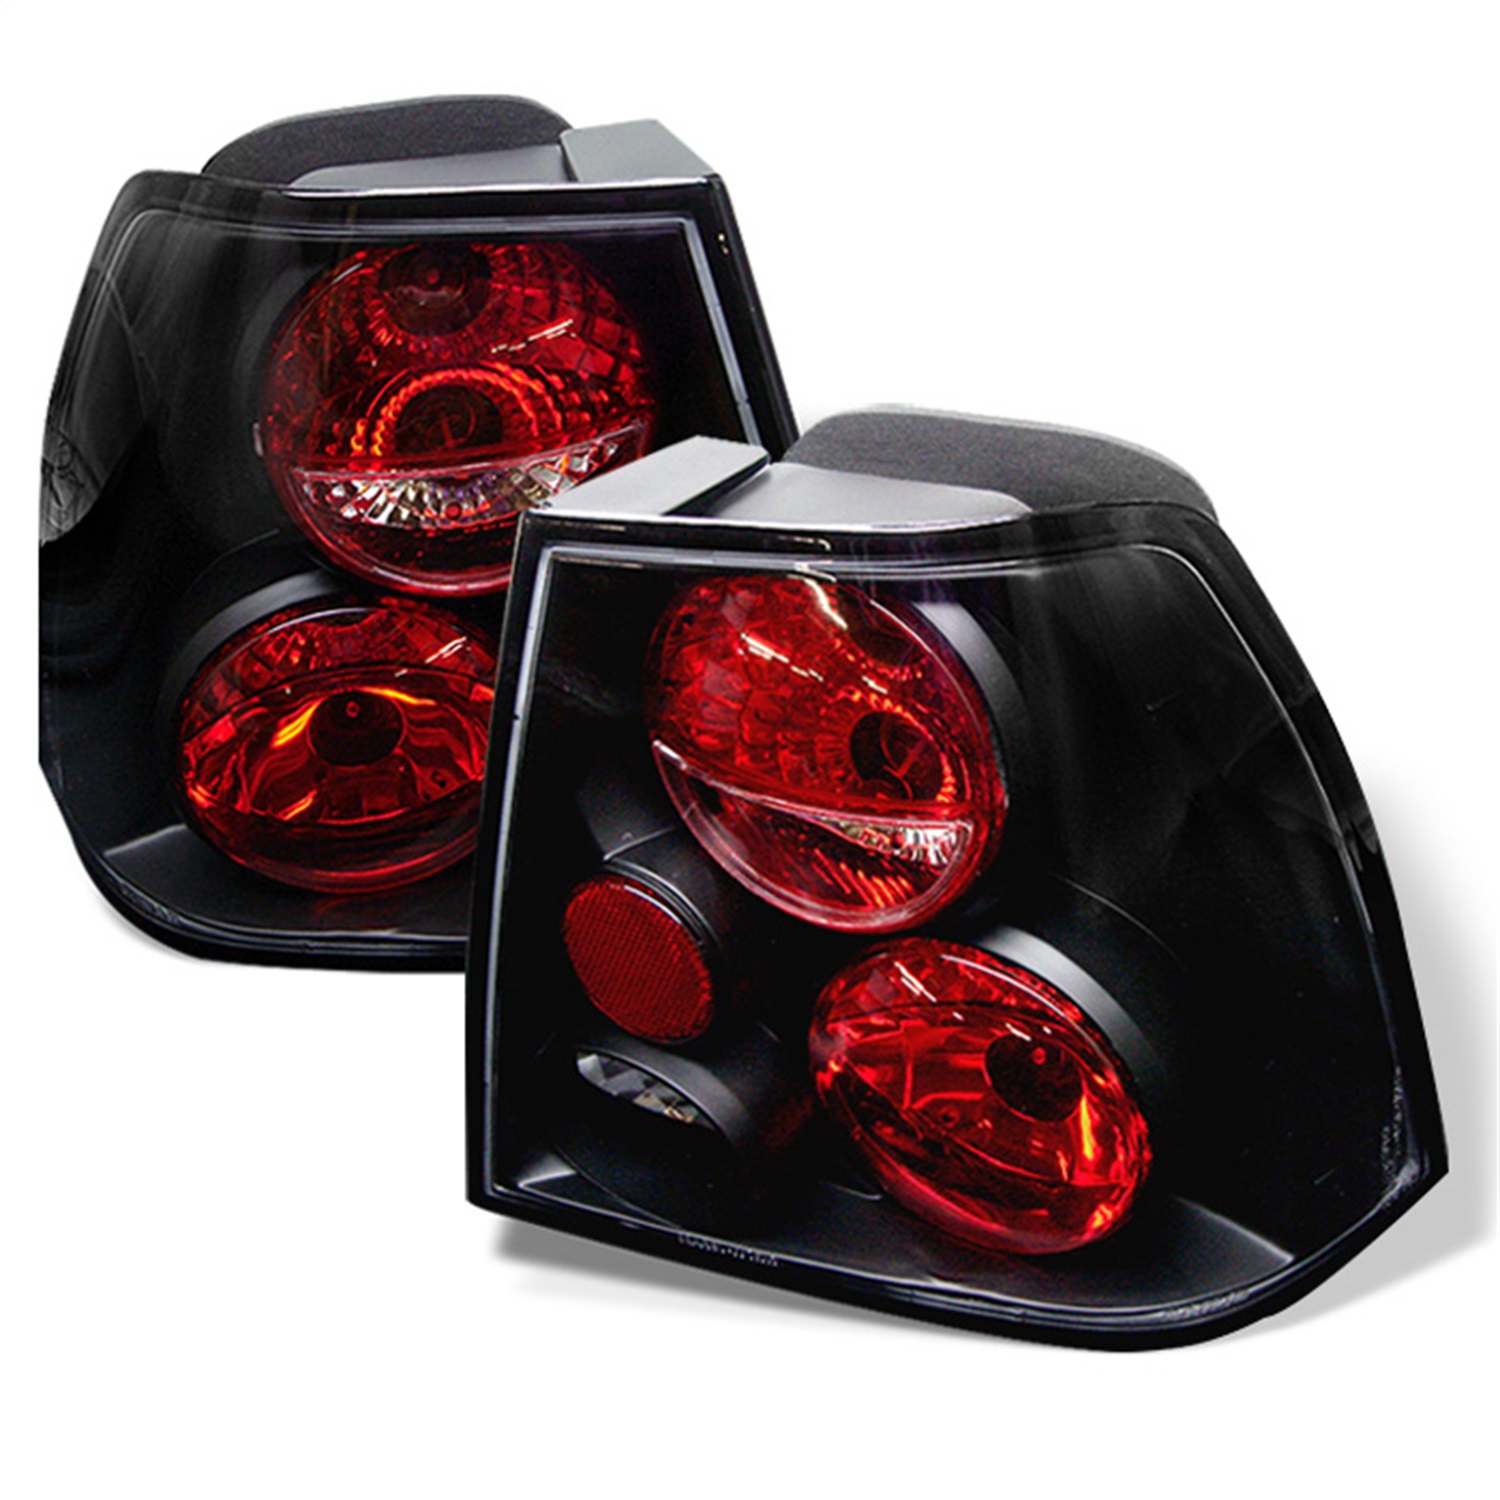 Spyder Auto 5008381 Euro Style Tail Lights Fits 99-04 Jetta